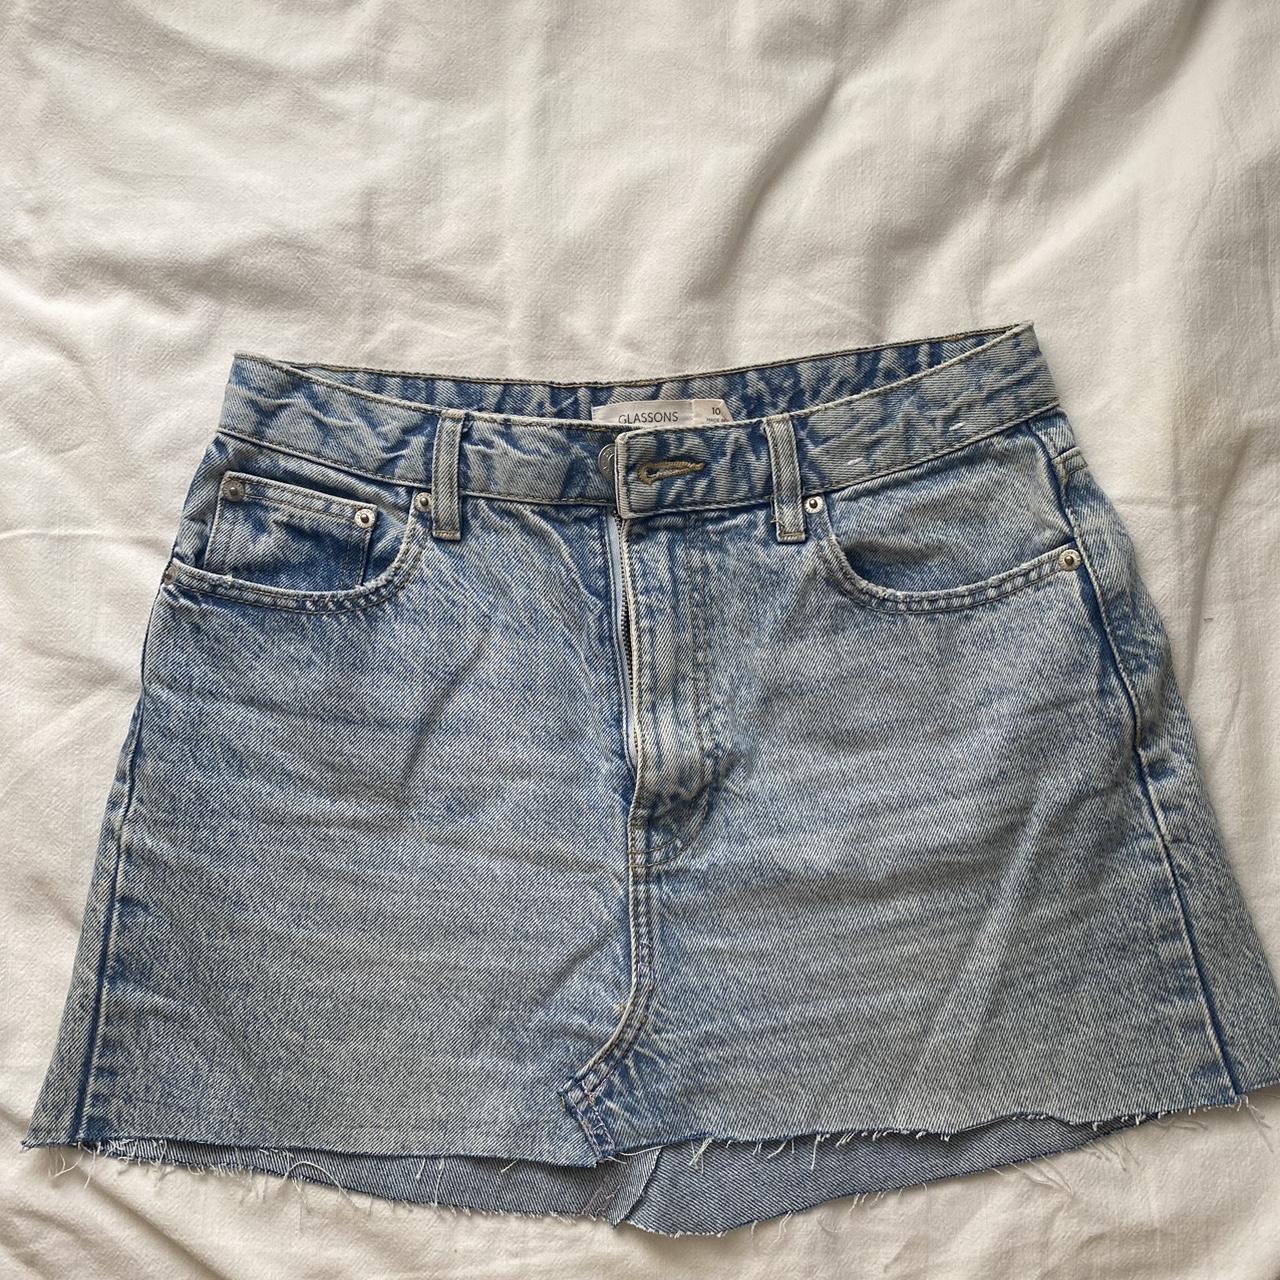 denim mini skirt originally glassons jeans that i... - Depop